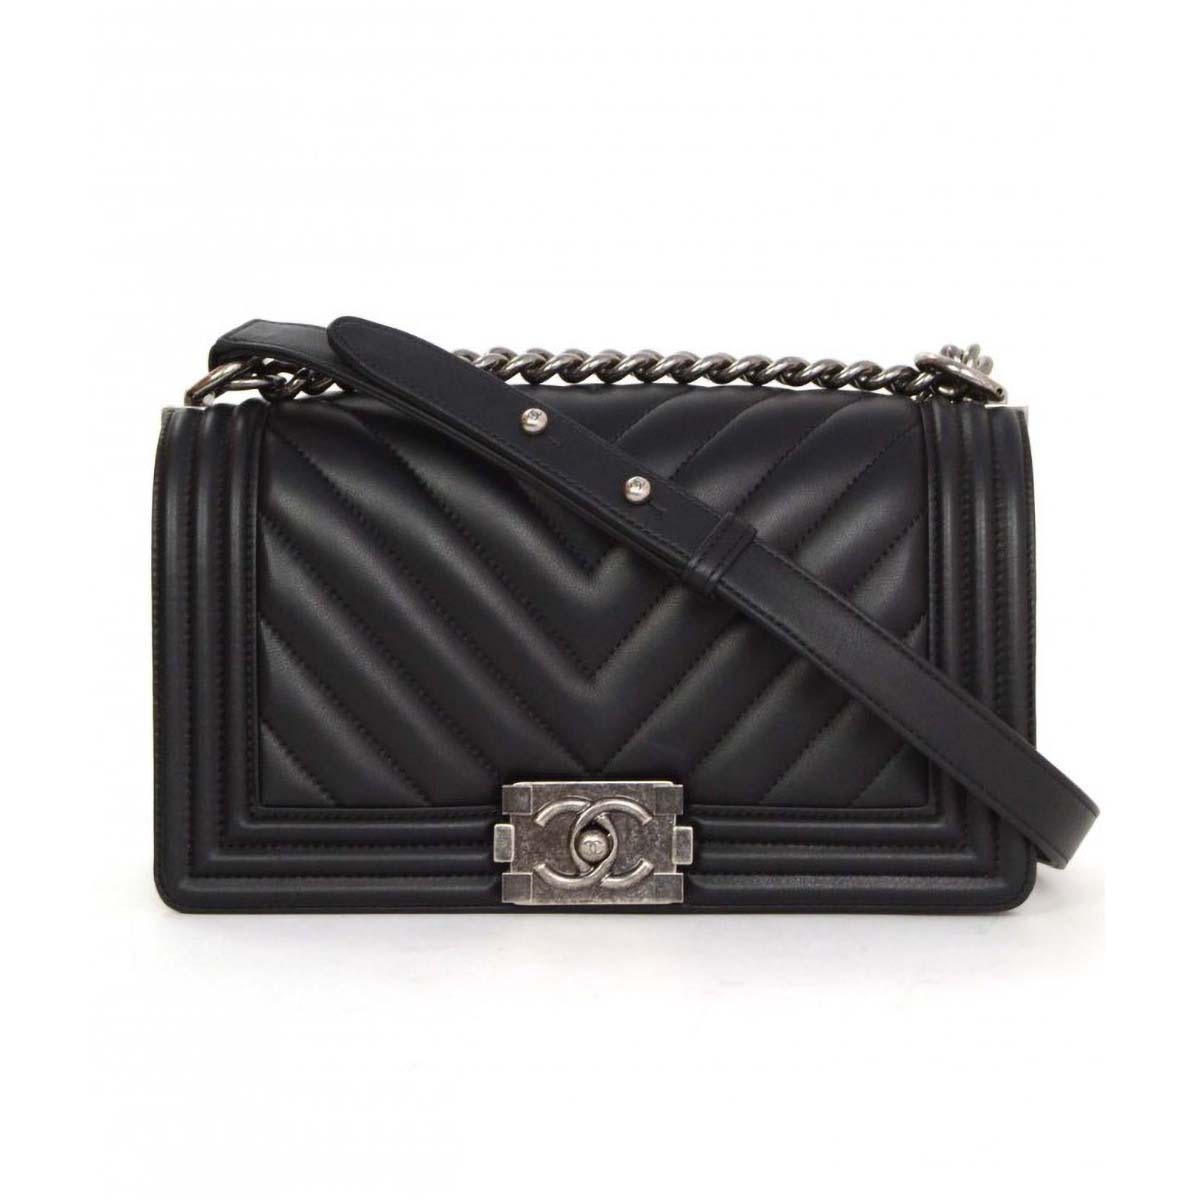 Chanel Boy Chanel Handbag in Chevron Quilted Calfskin Leather-Black - LULUX